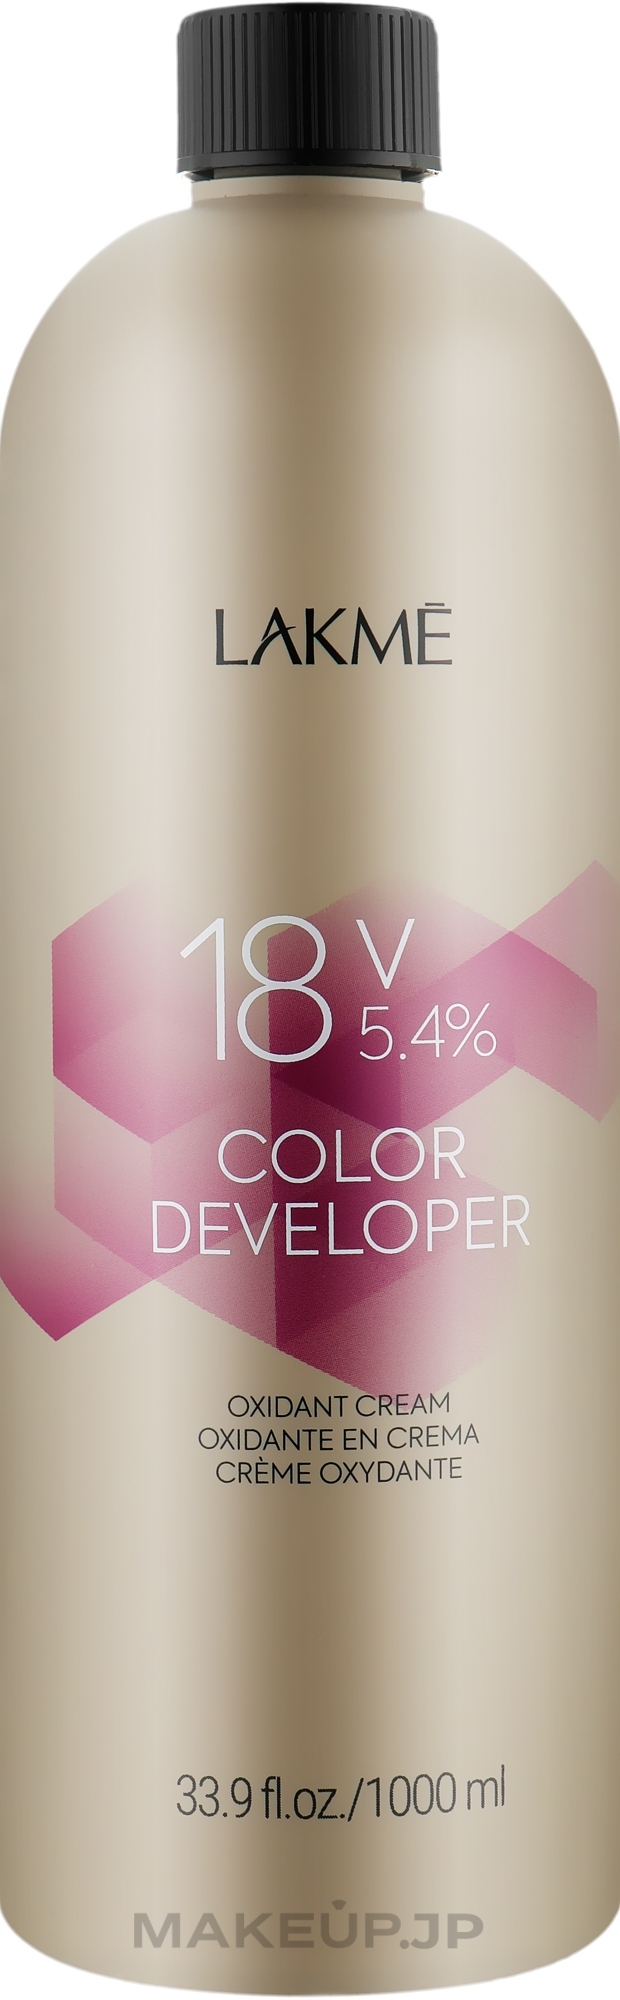 Oxidizing Cream - Lakme Color Developer 18V (5,4%) — photo 1000 ml